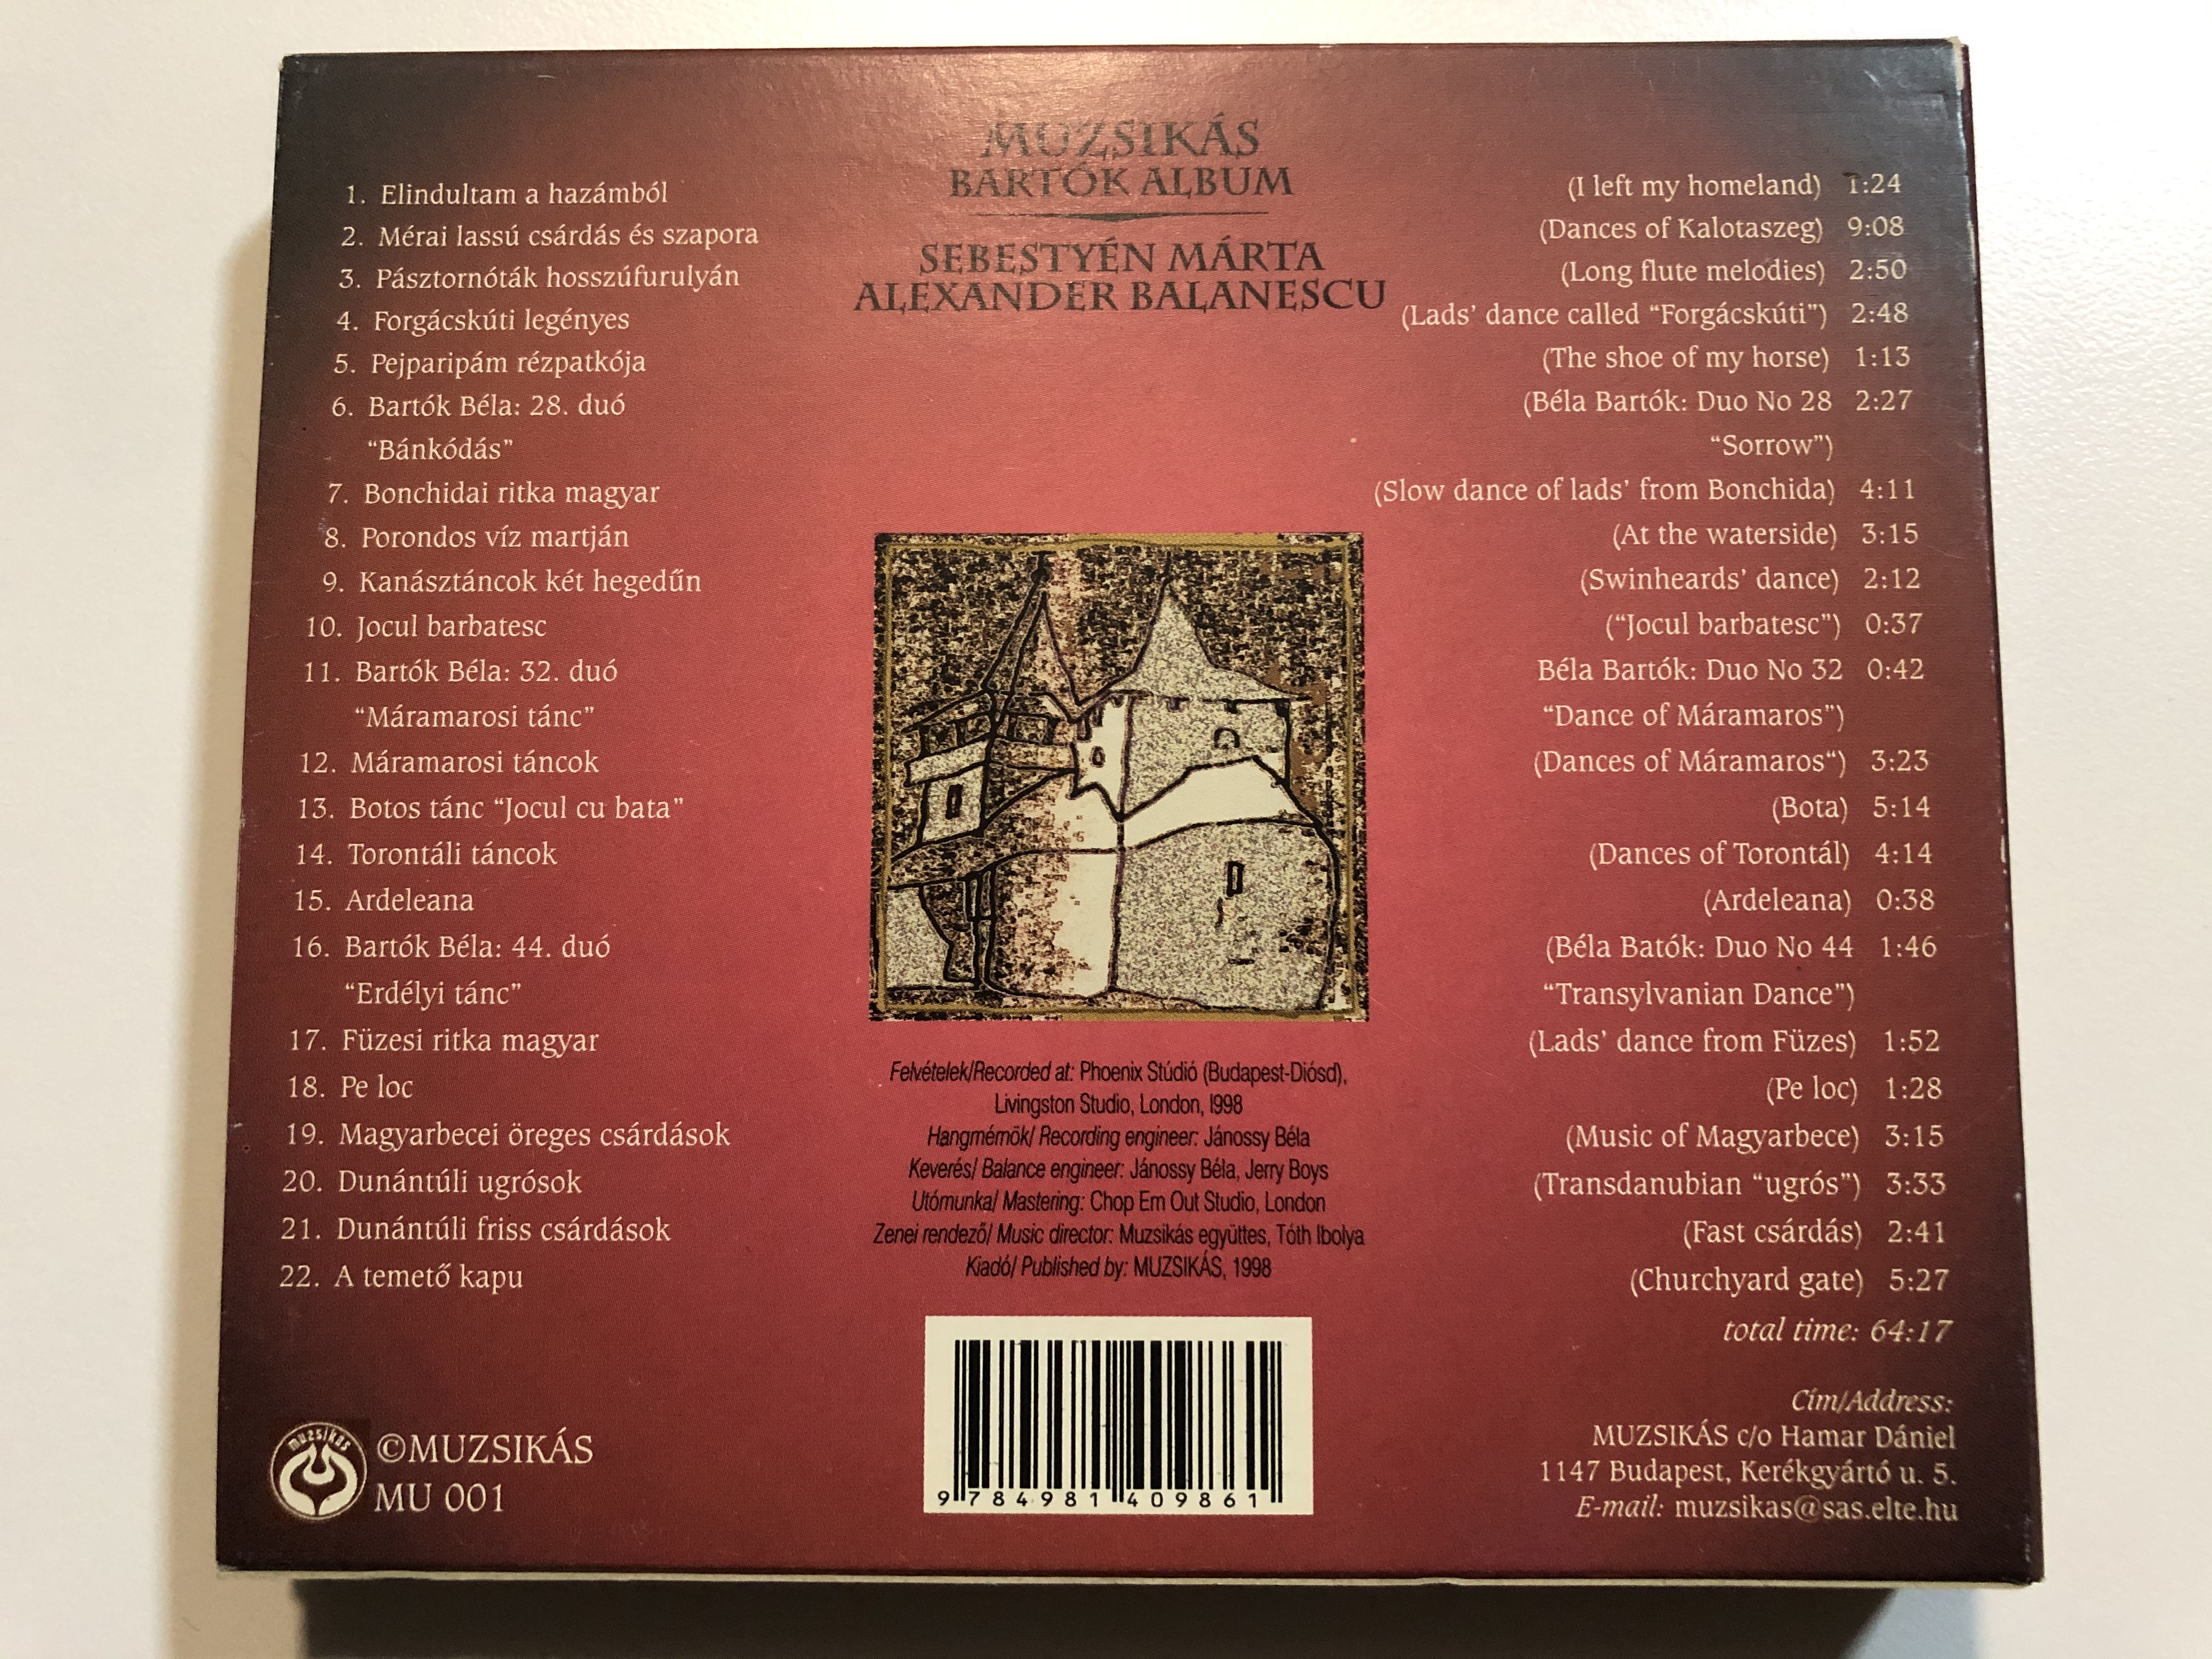 muzsik-s-bart-k-album-sebesty-n-m-rta-alexander-balanescu-muzsik-s-audio-cd-1998-mu-001-2-.jpg